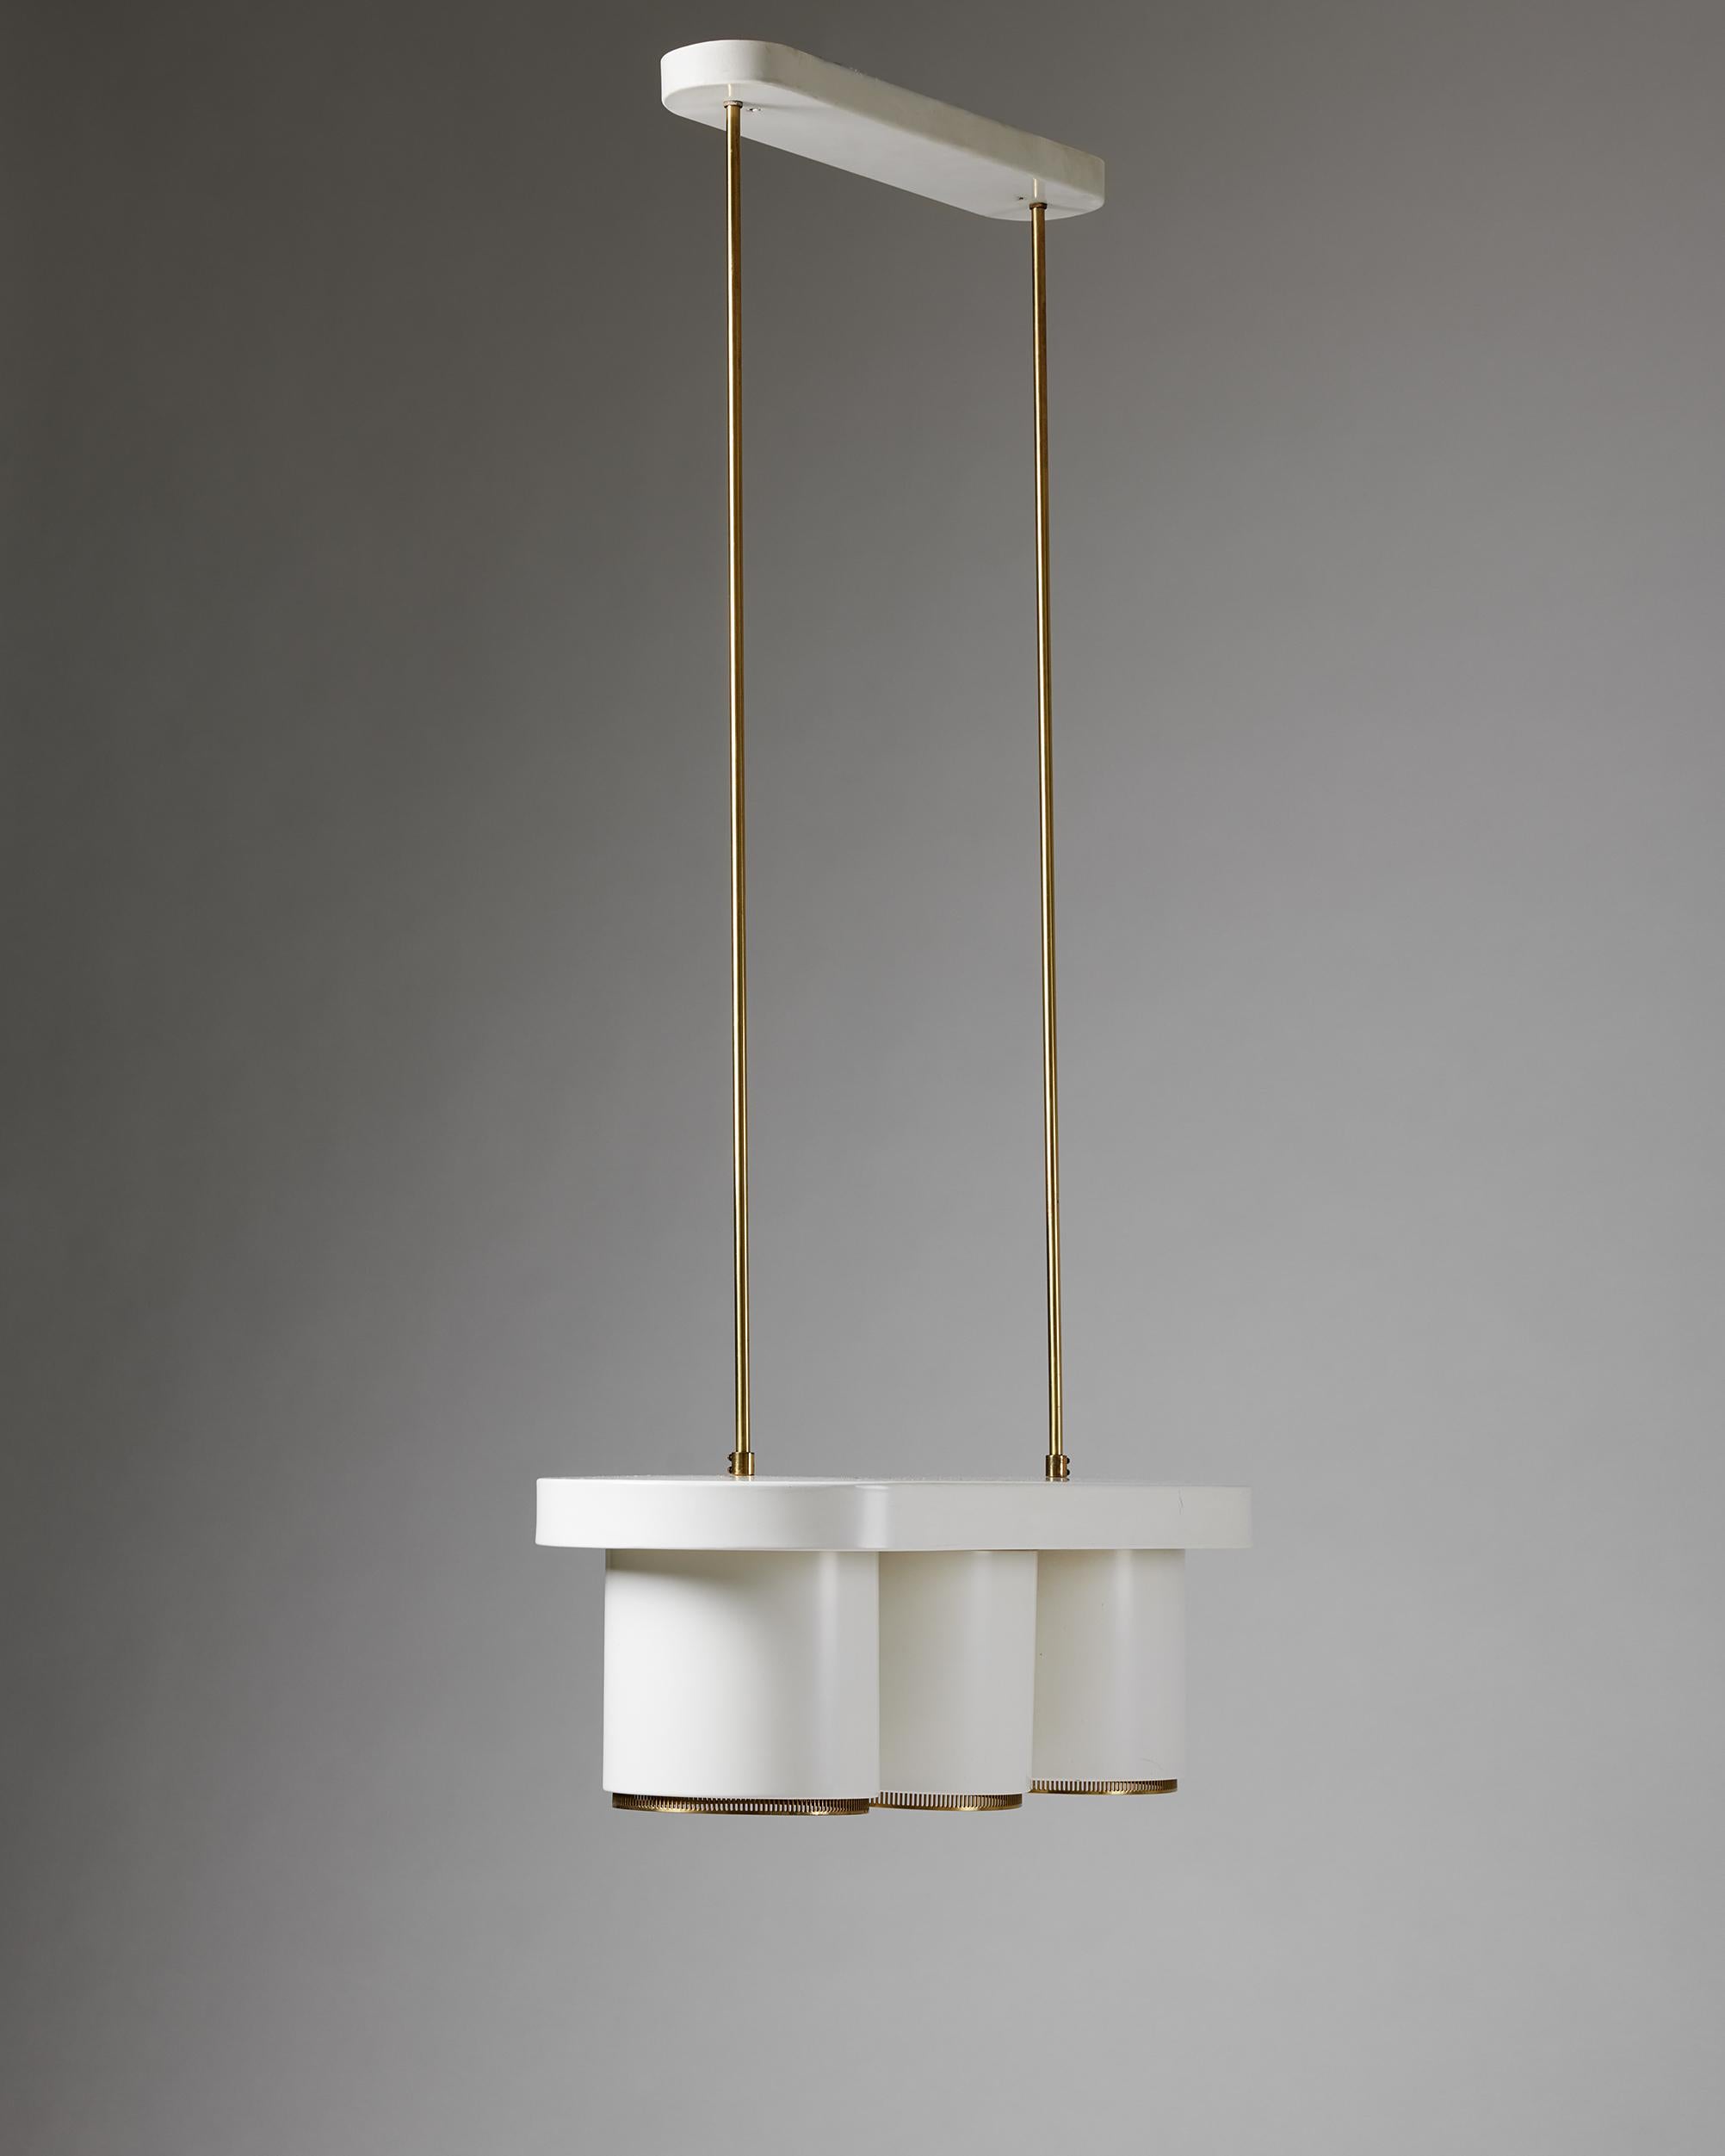 Ceiling lamp, model A203, designed by Alvar Aalto for Valaistustyö, Finland For Sale 7